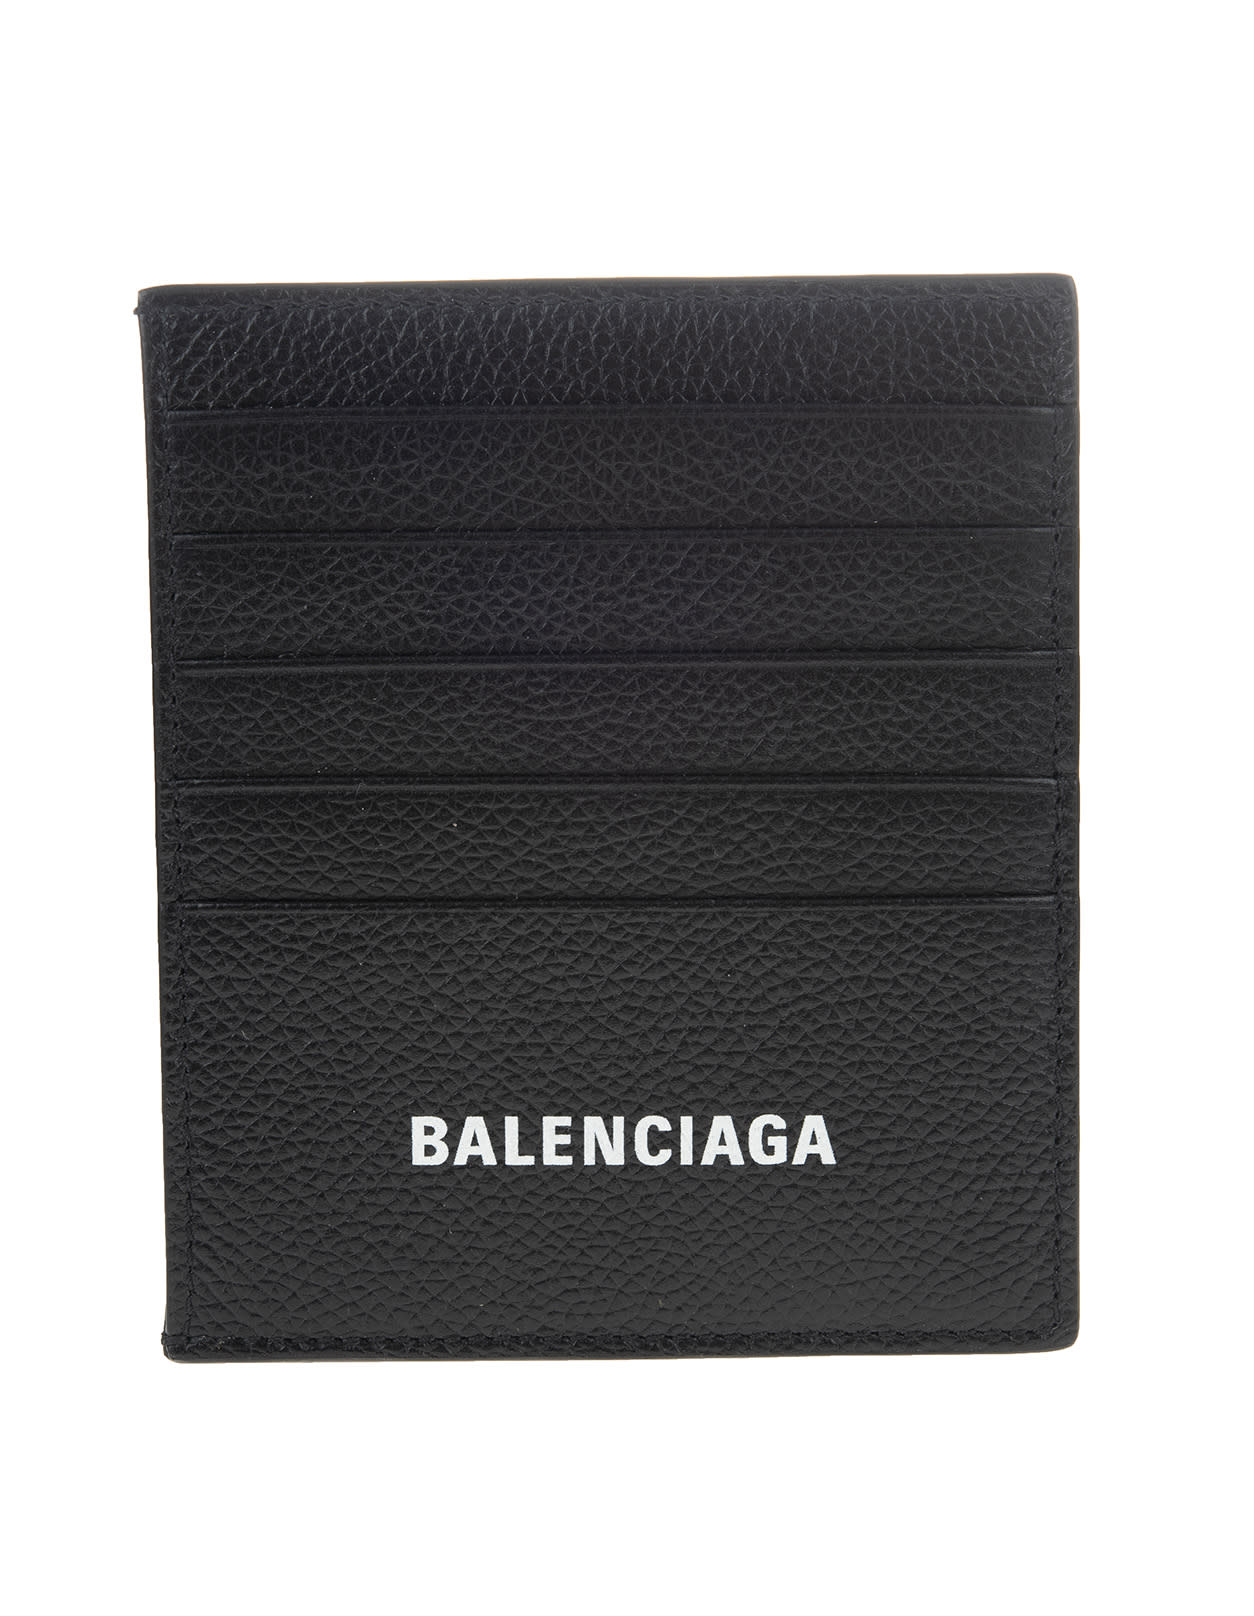 Balenciaga Black Crocodile Effect Leather Card Holder With White Logo